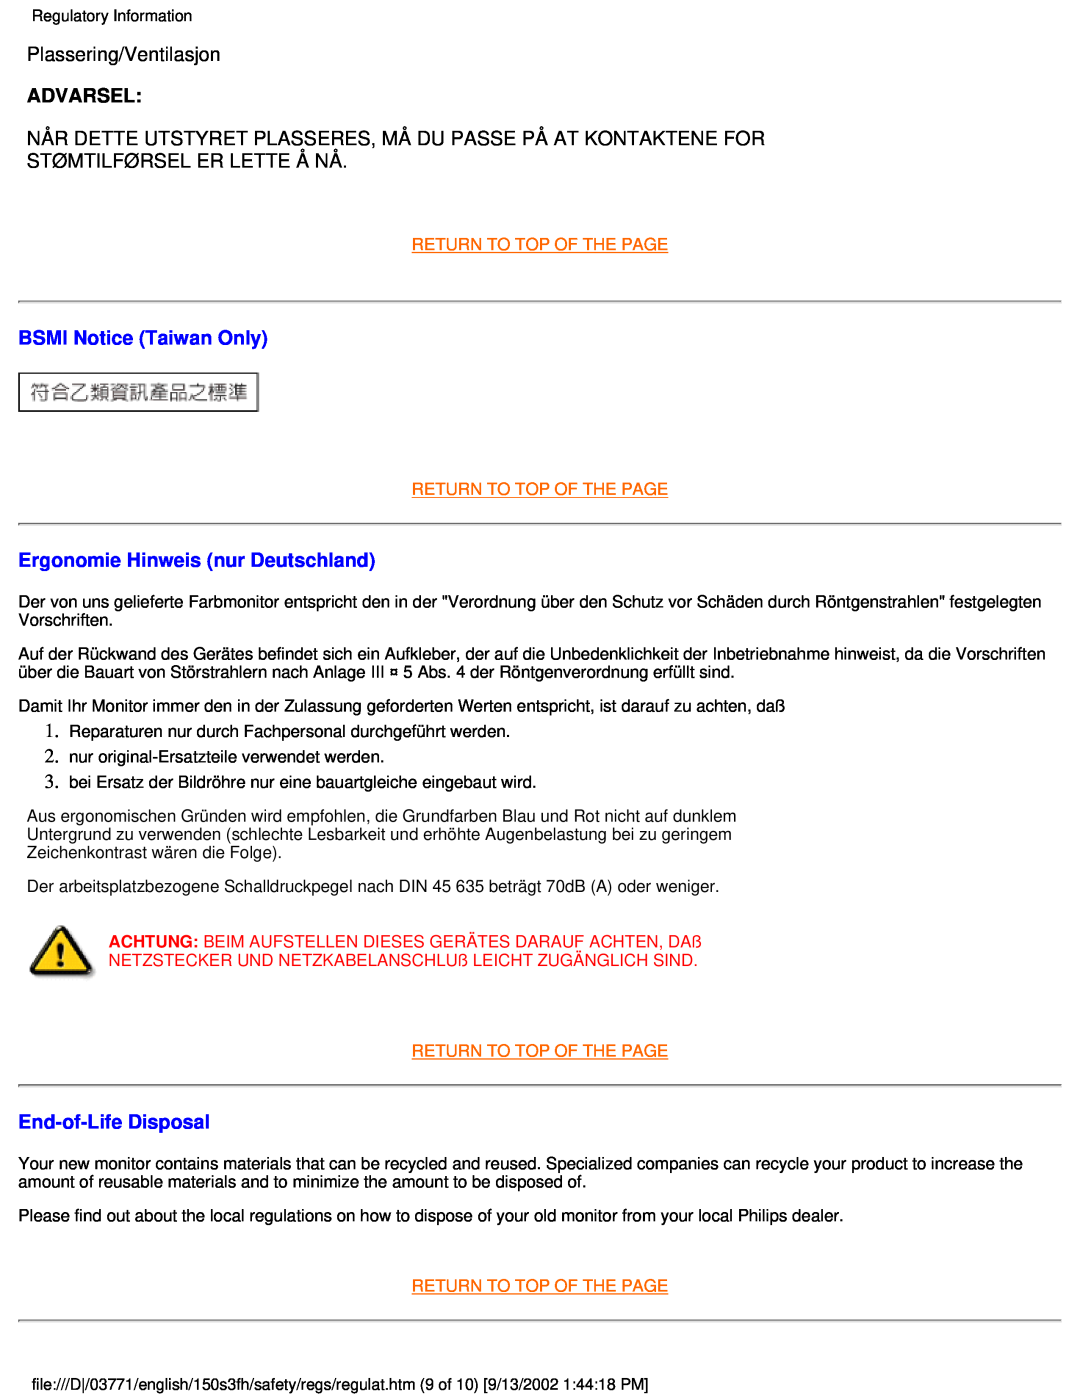 Philips 150S3F user manual Advarsel, BSMI Notice Taiwan Only, Ergonomie Hinweis nur Deutschland, End-of-Life Disposal 